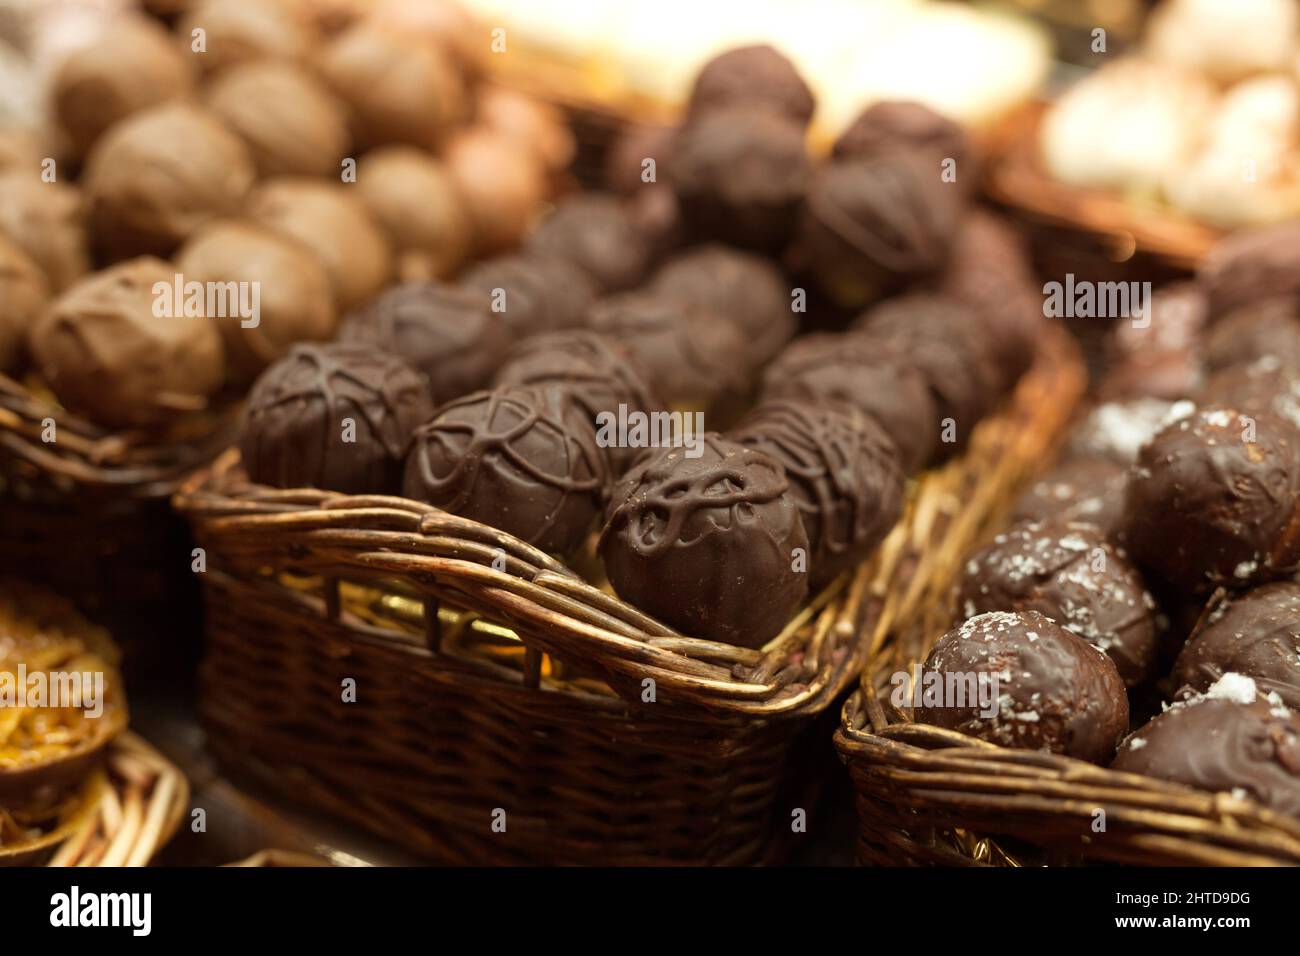 chocolate truffle balls on market counter Stock Photo